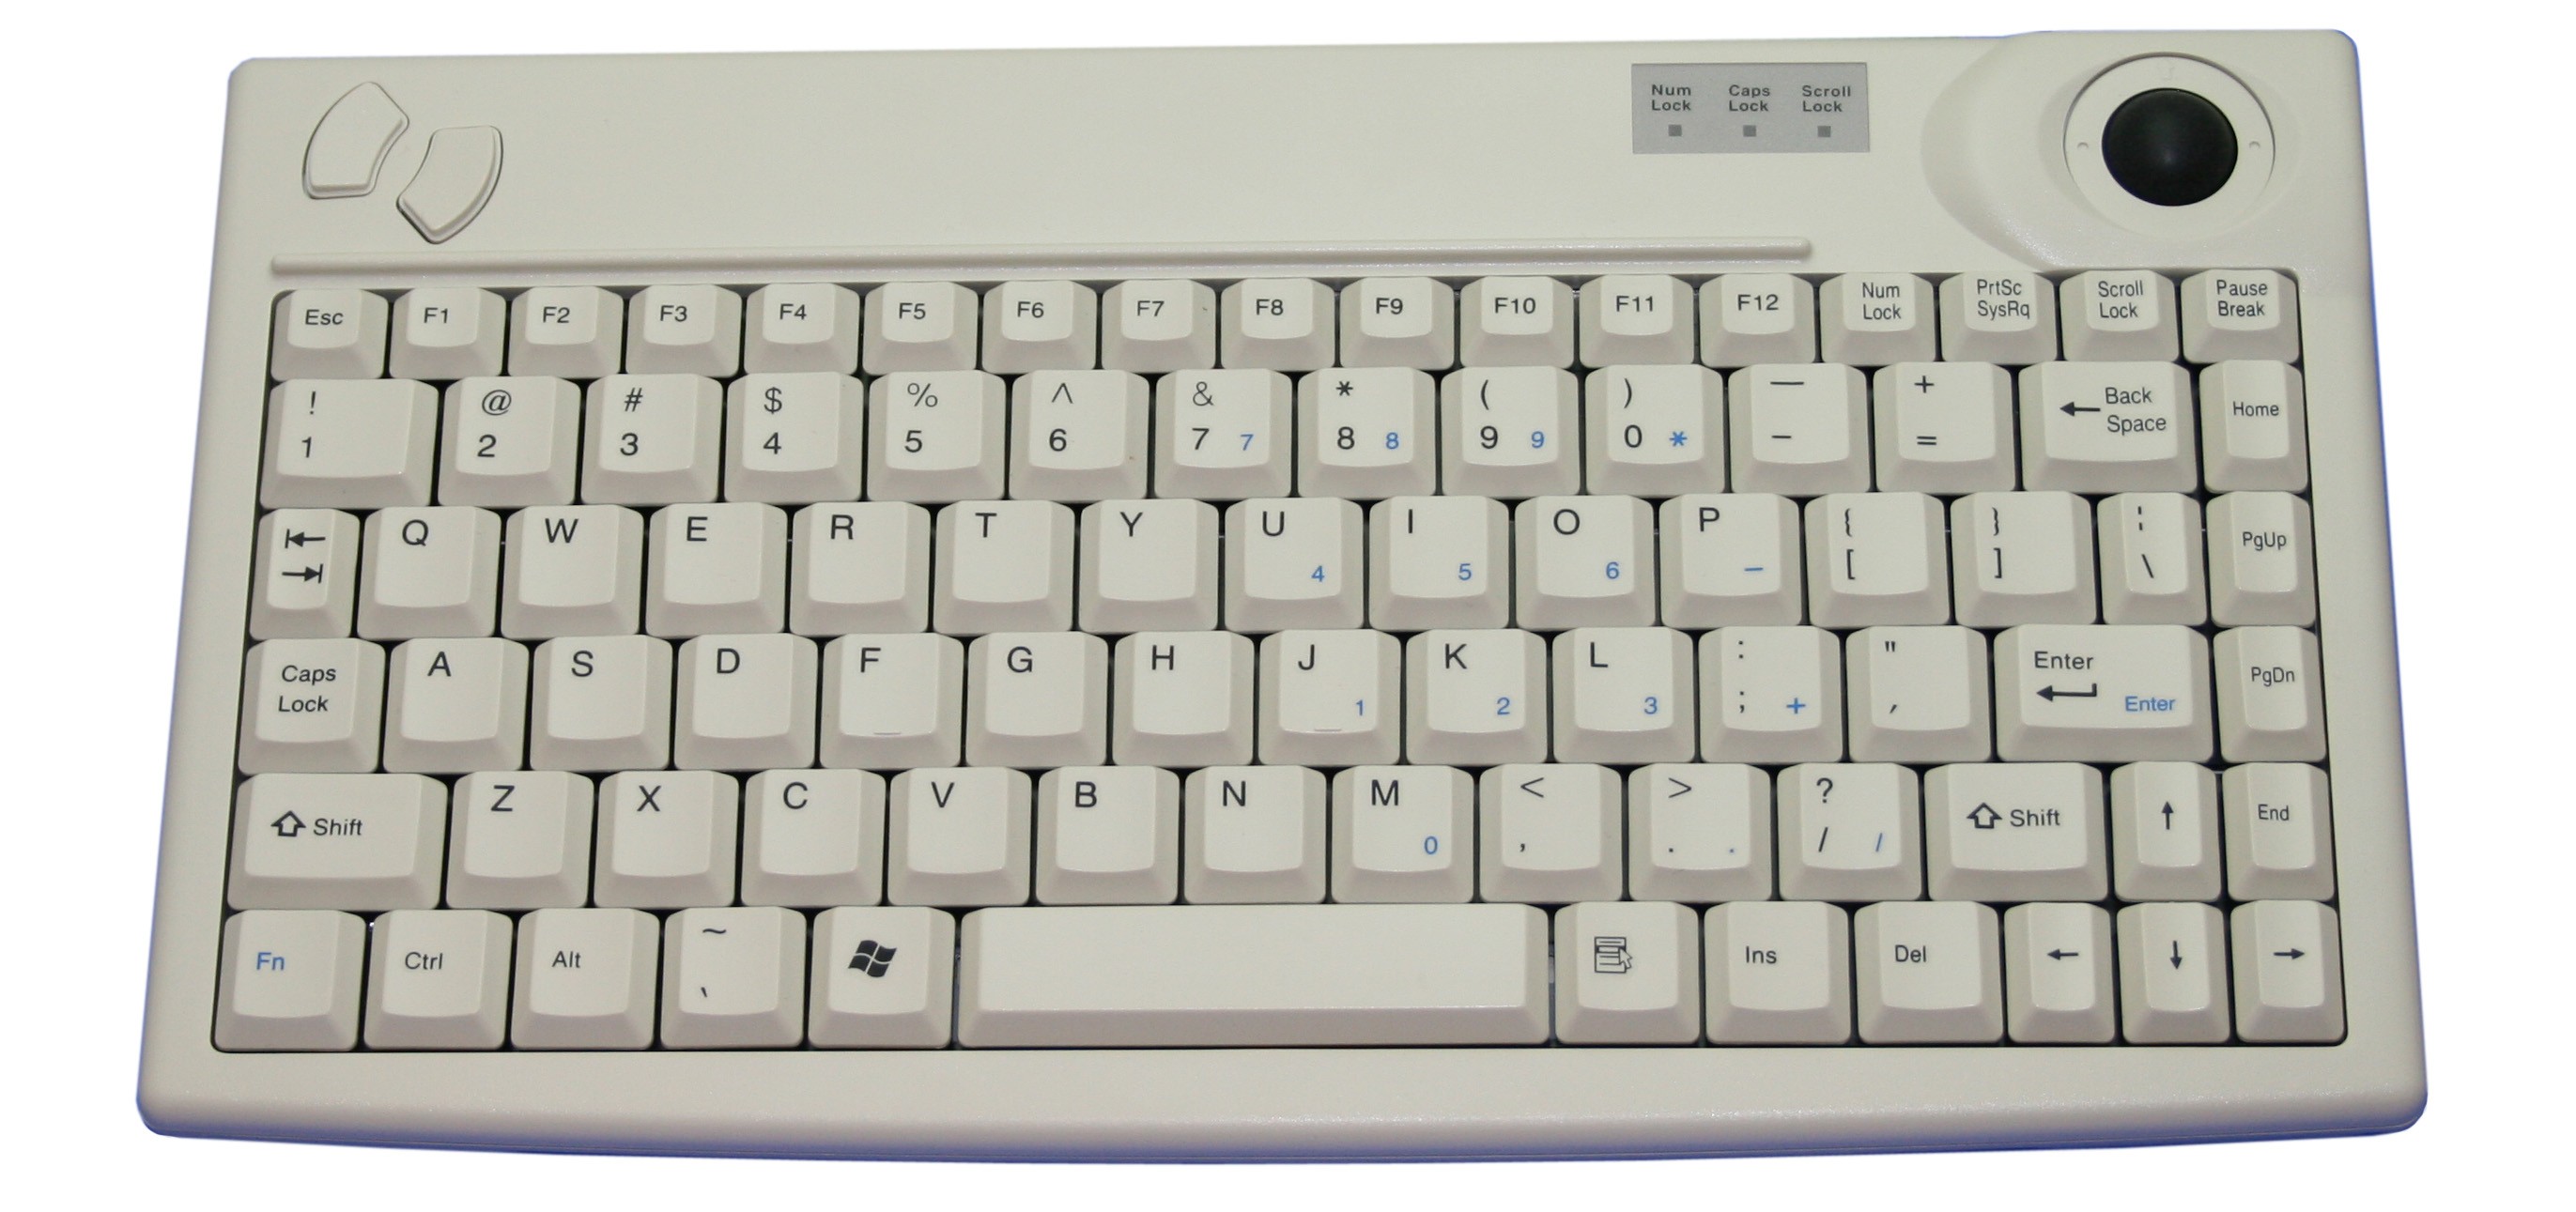 86 Key Size Minimized Trackball Keyboard, USB, light grey, German layout